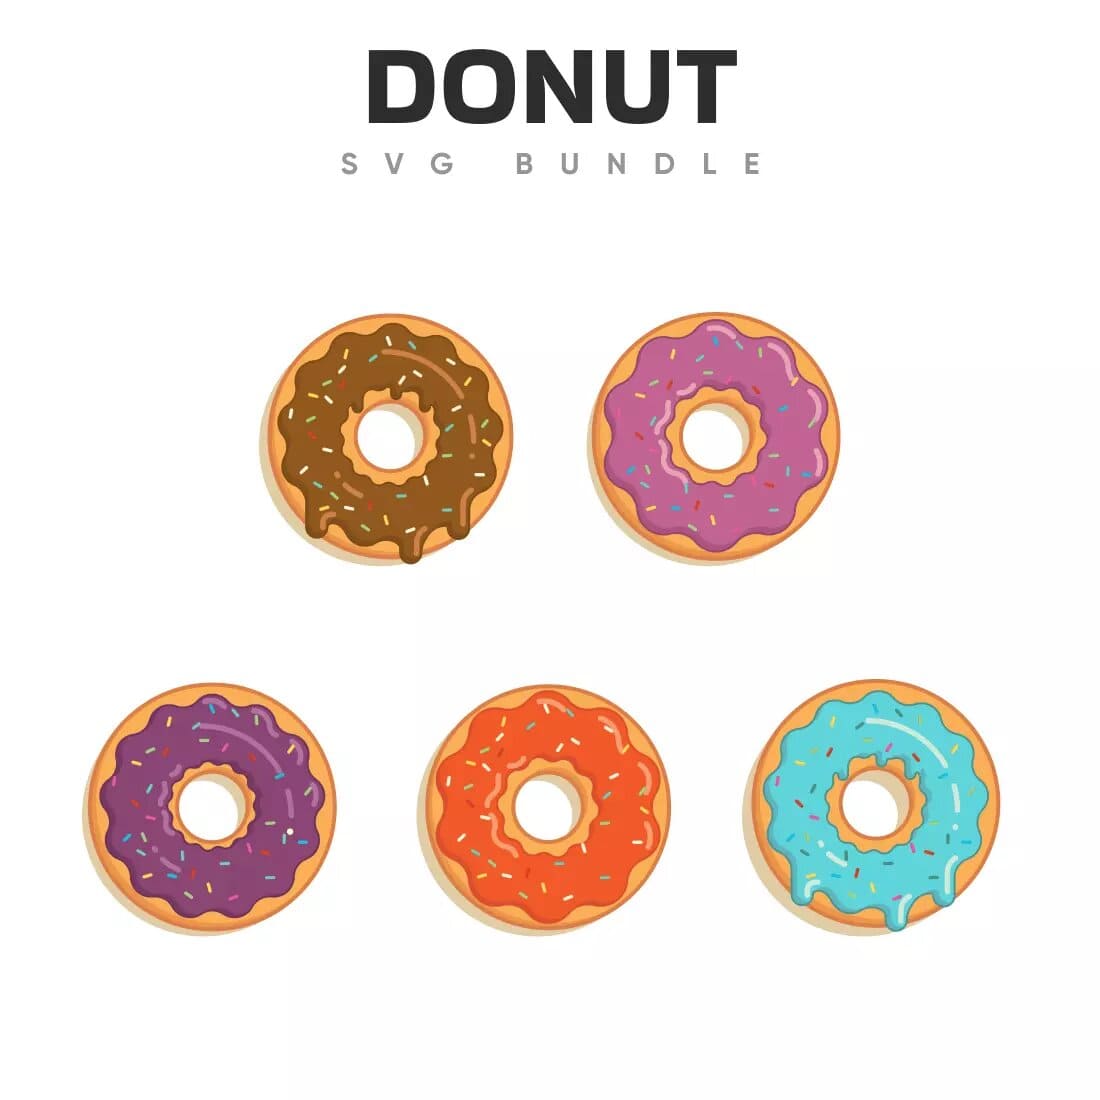 Donut SVG Bundle Preview 3.